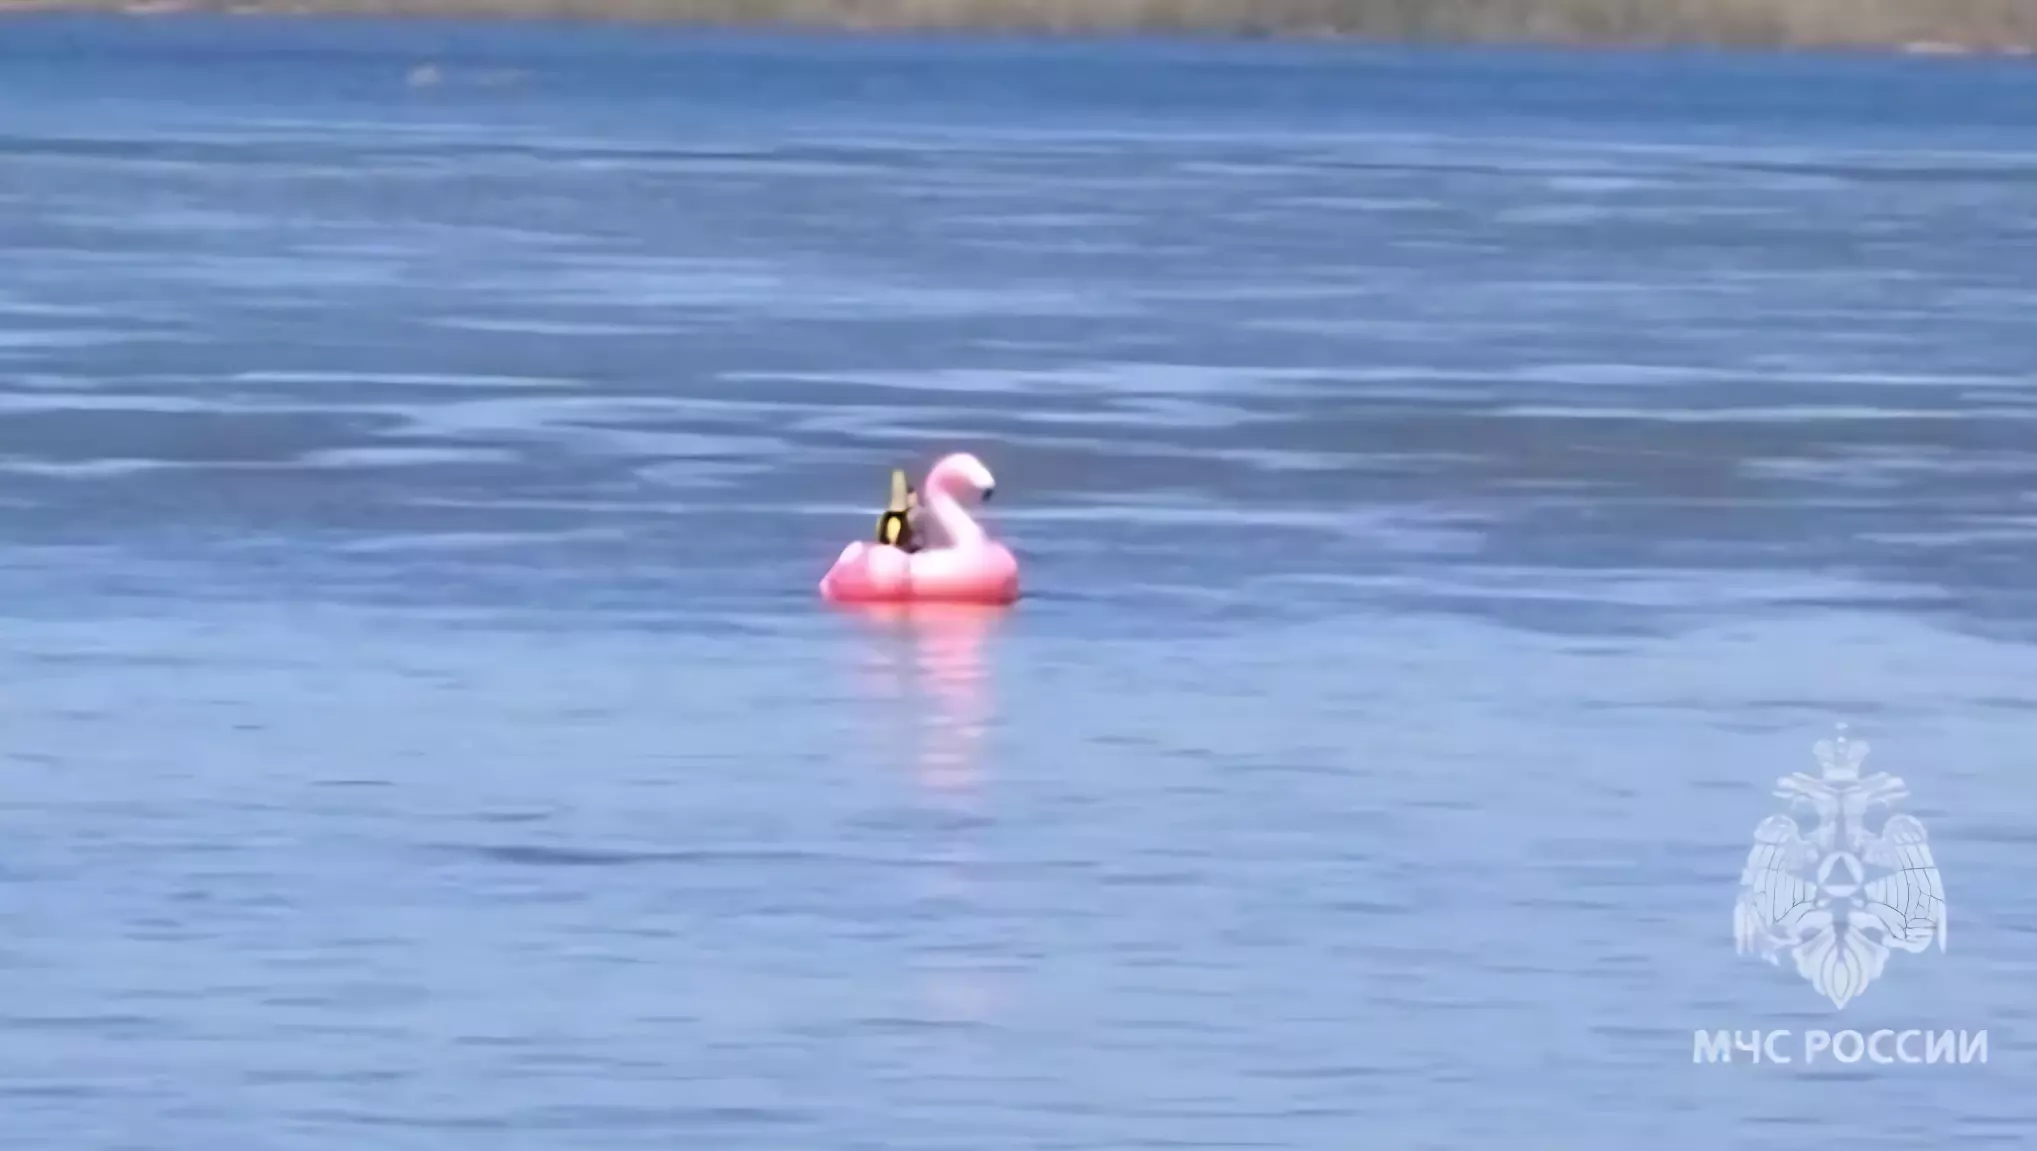 Блогершу на надувном фламинго спасали из воды